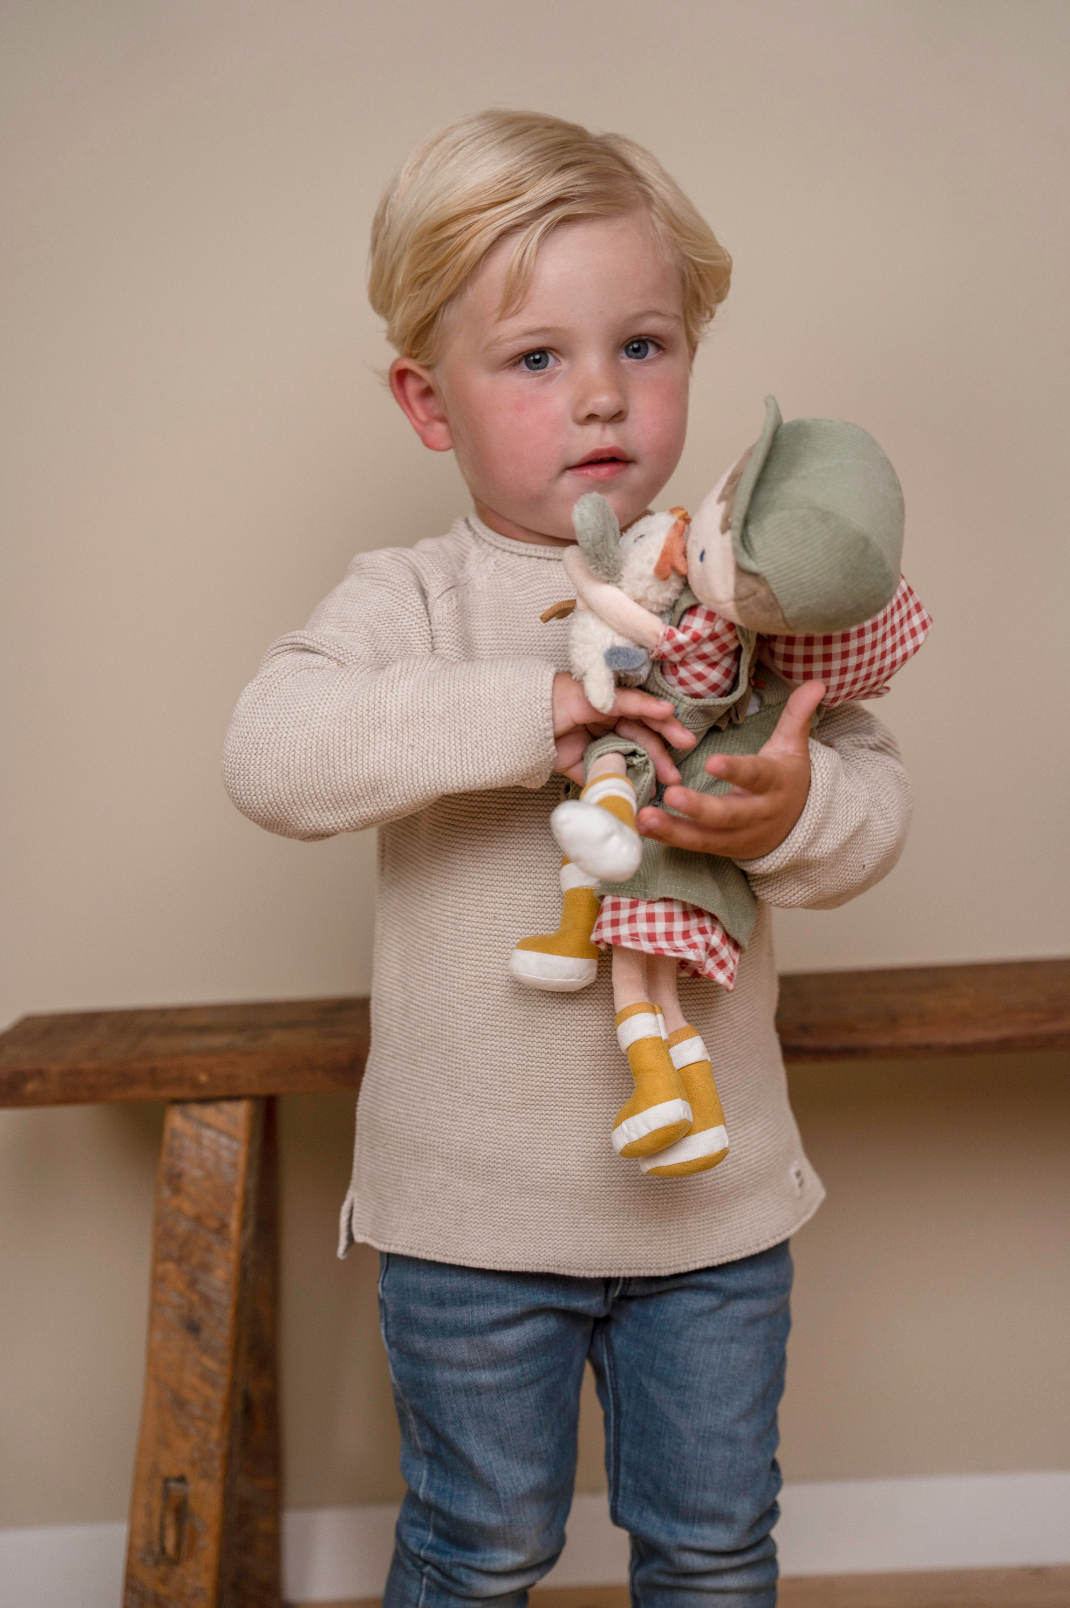 Farmer Jim doll with chicken 35cm - Little Dutch